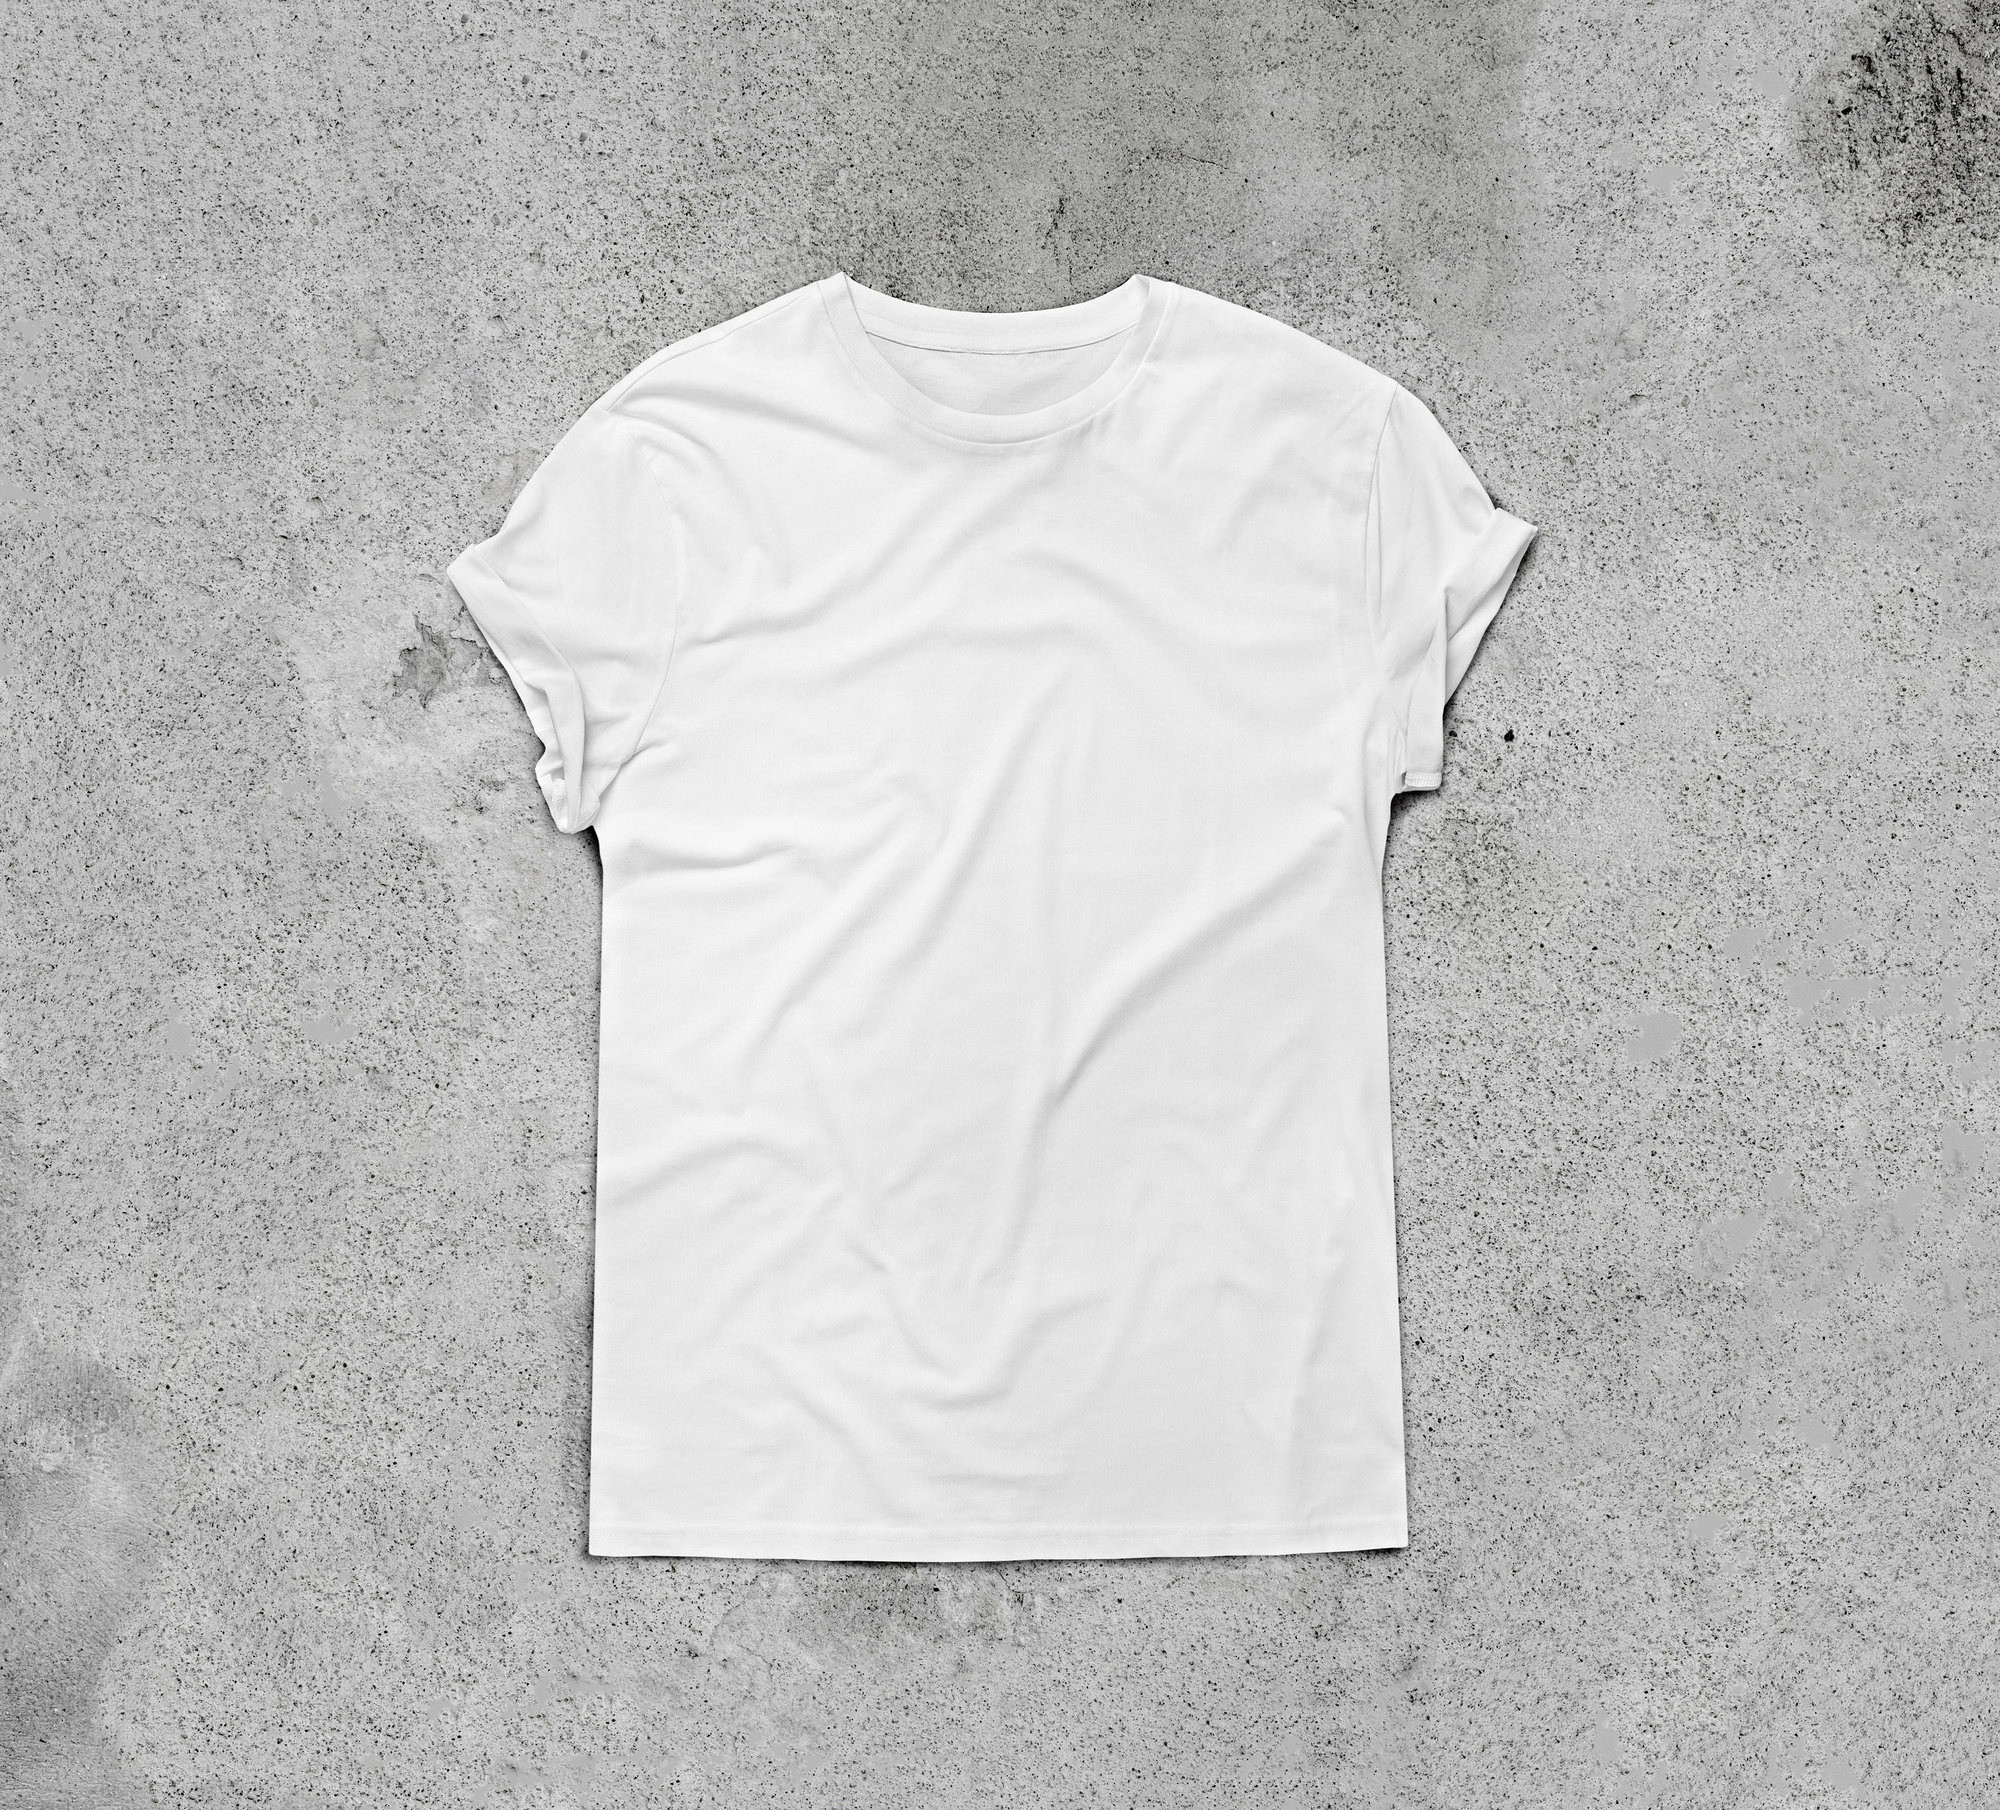 Hanes, Inc. White T-shirt. Cotton. 29 x 35 1/2" (73.7 x 90.2 cm) (irreg). Gift of the manufacturer. Image courtesy Shutterstock/SFIO CRACHO 2017